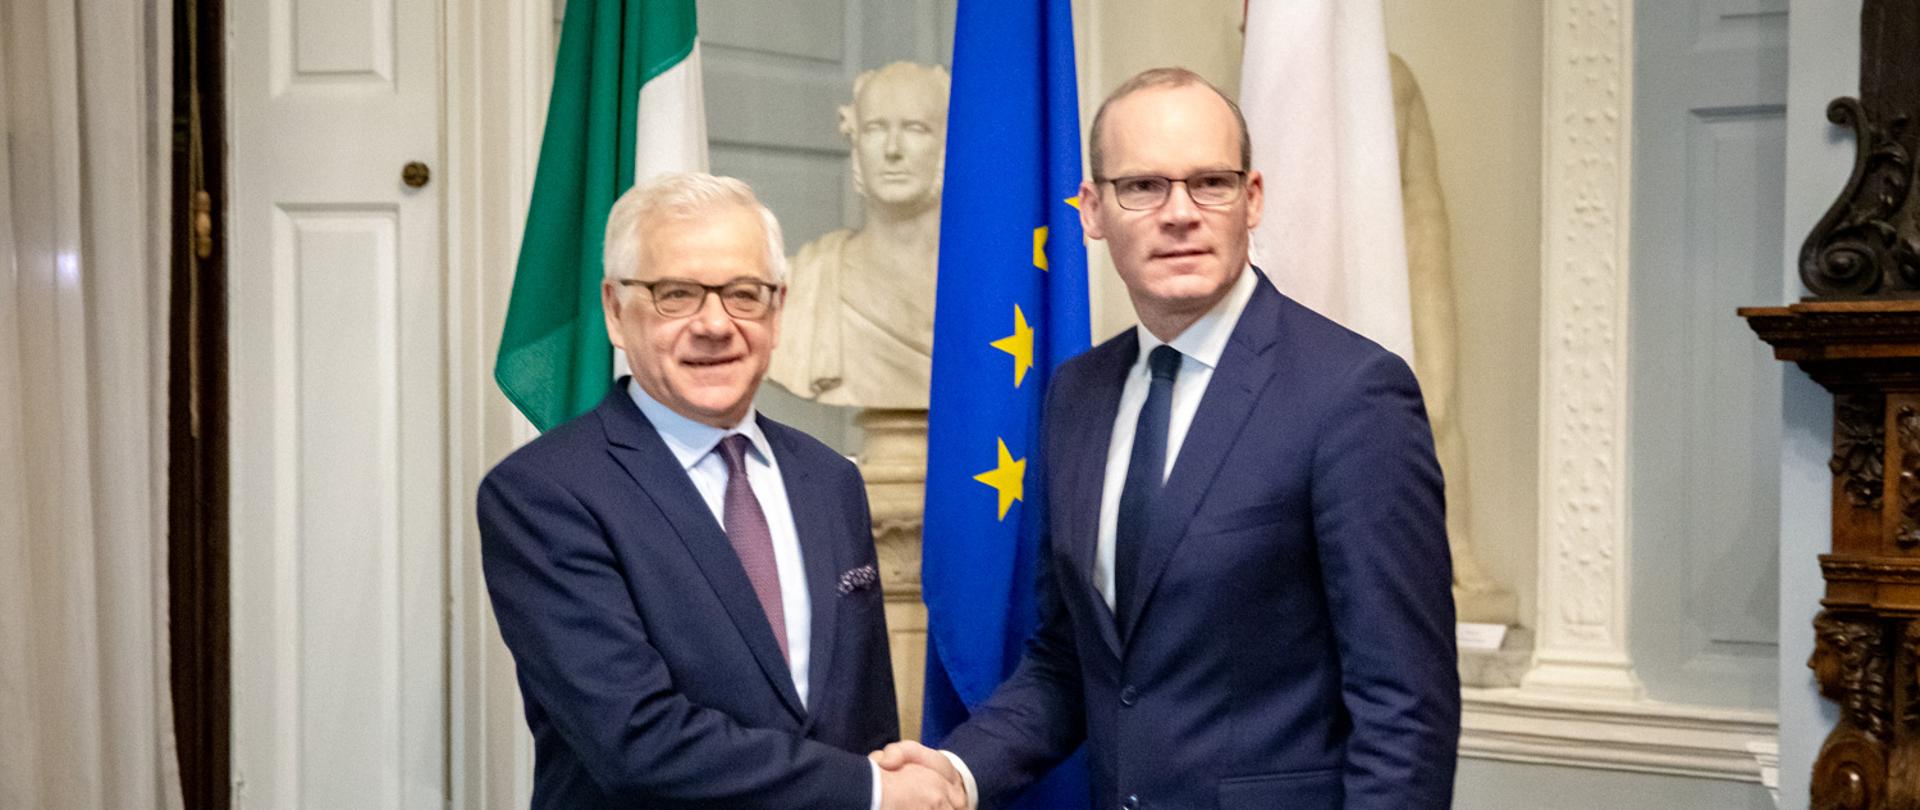 Minister Jacek Czaputowicz visits Ireland